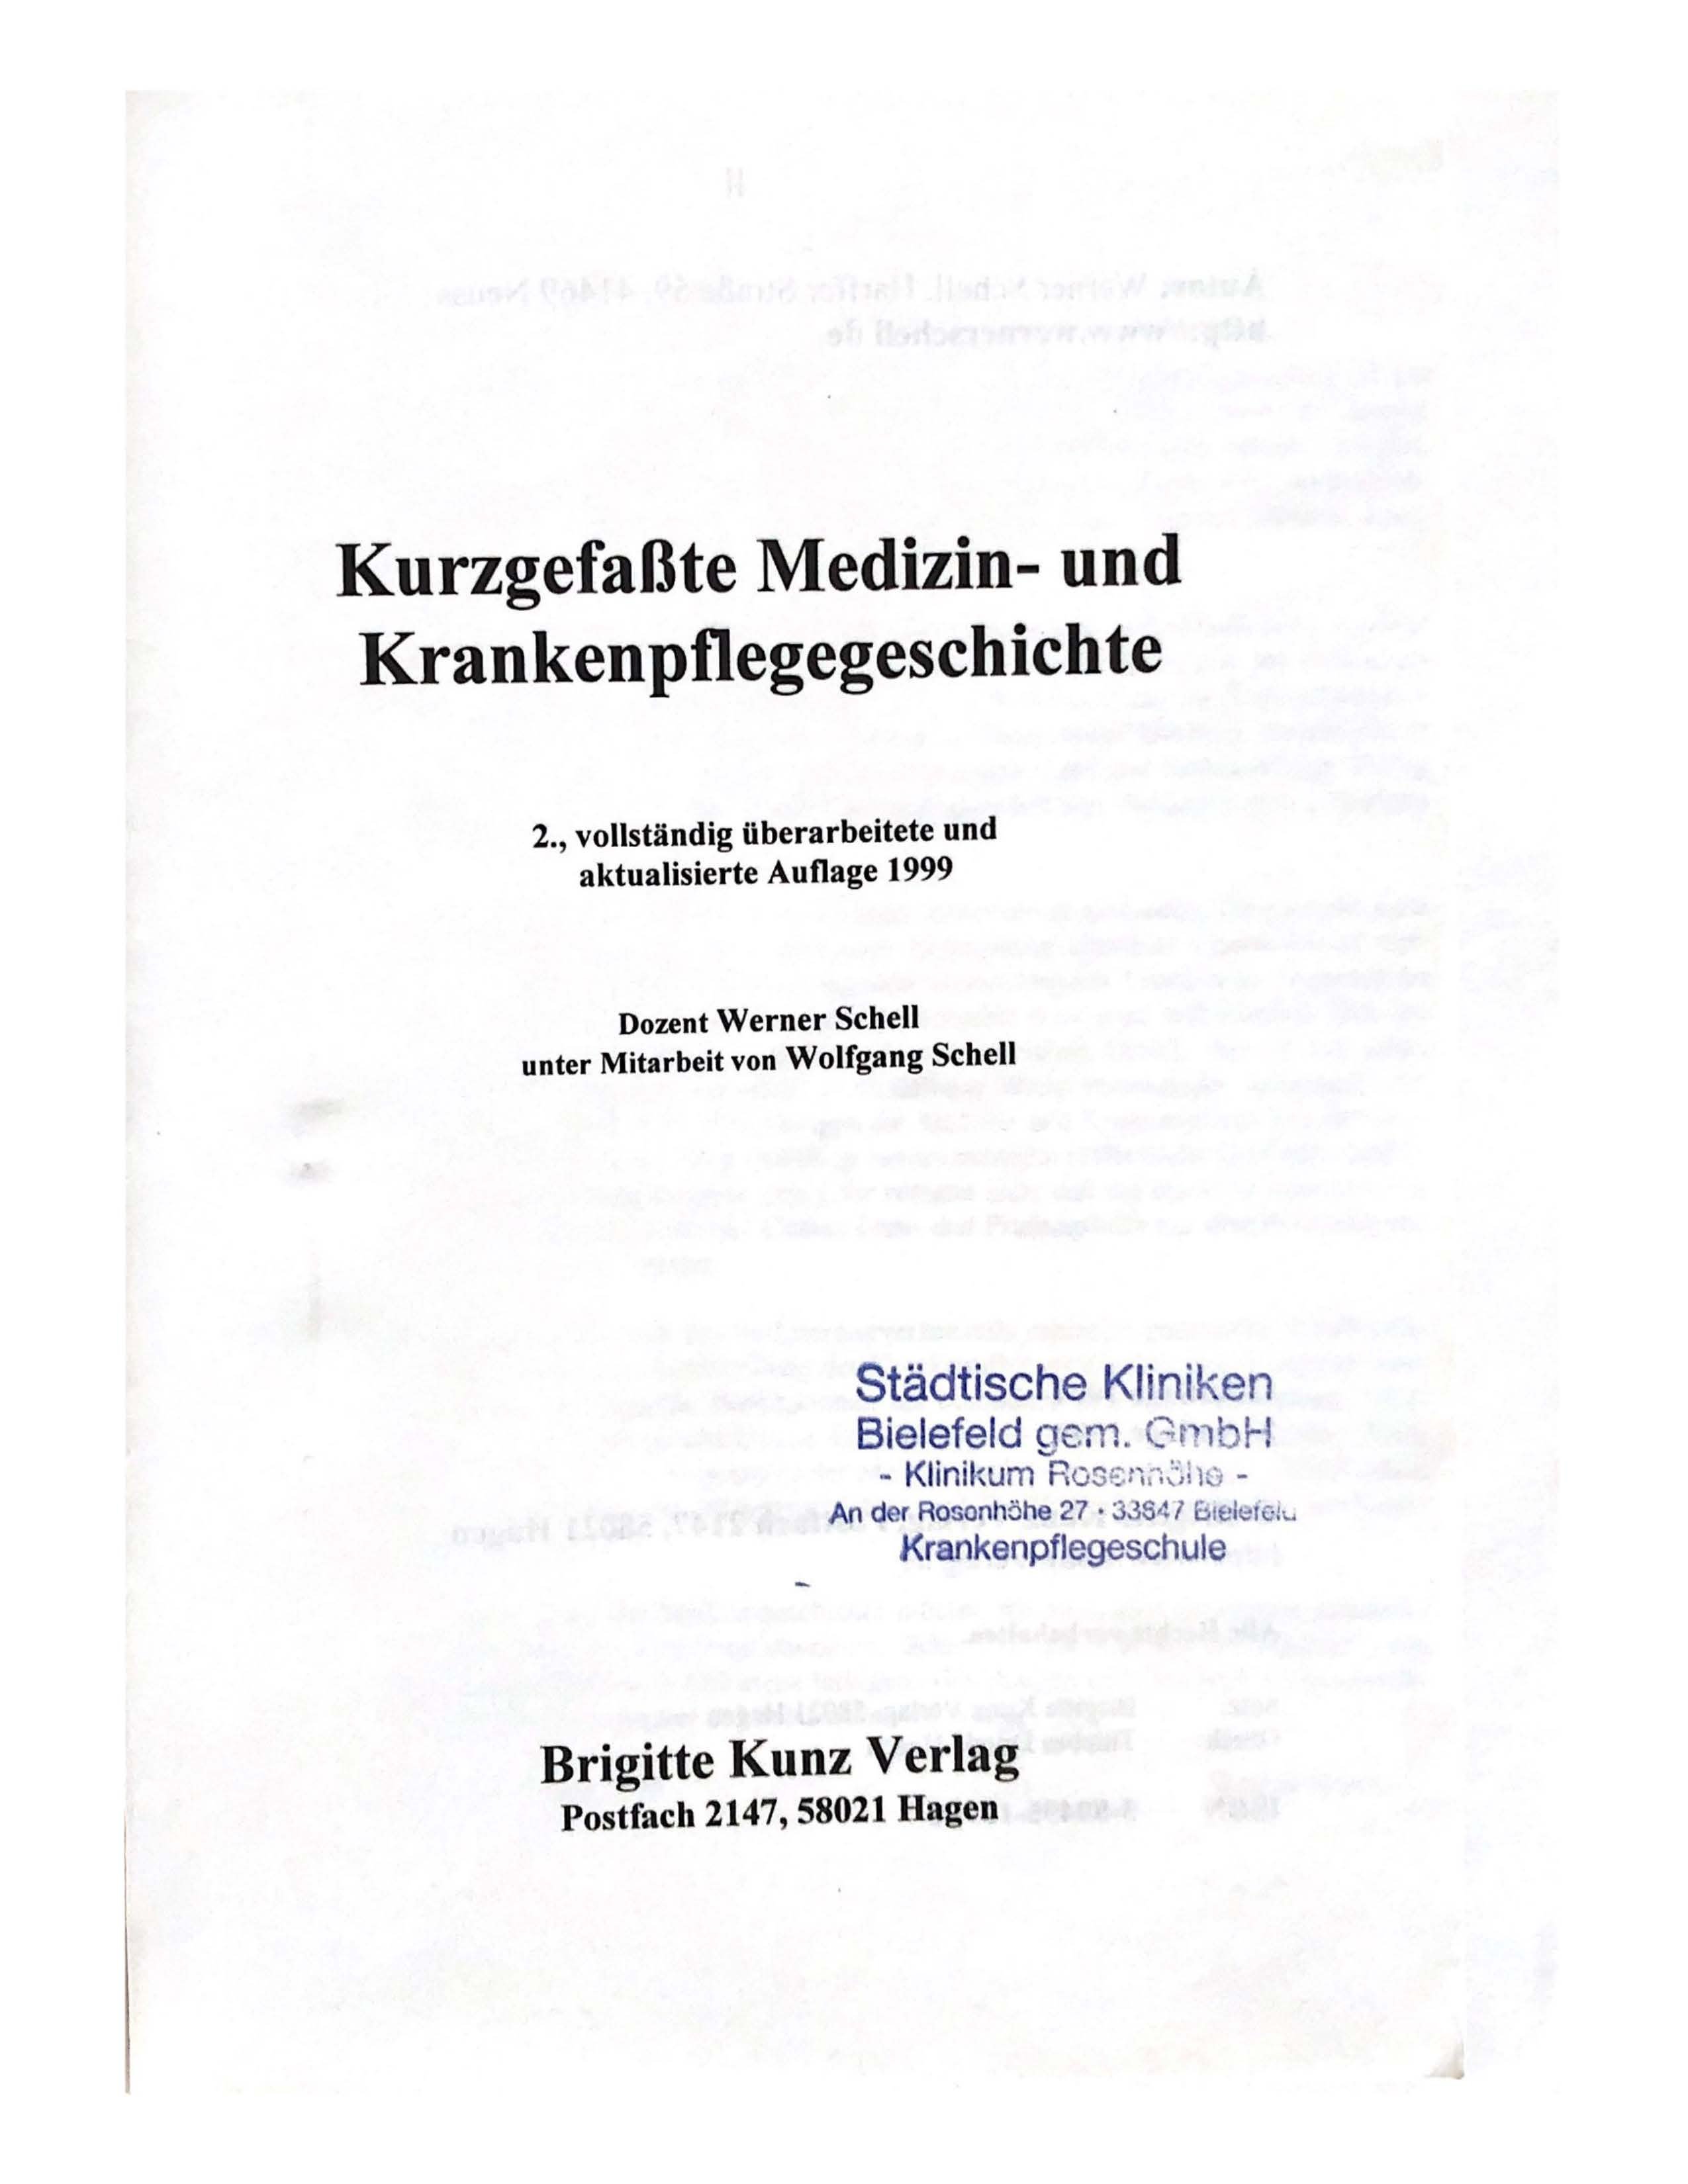 Kurzgefaßte Medizin- und Krankenpflegegeschichte (Krankenhausmuseum Bielefeld e.V. CC BY-NC-SA)